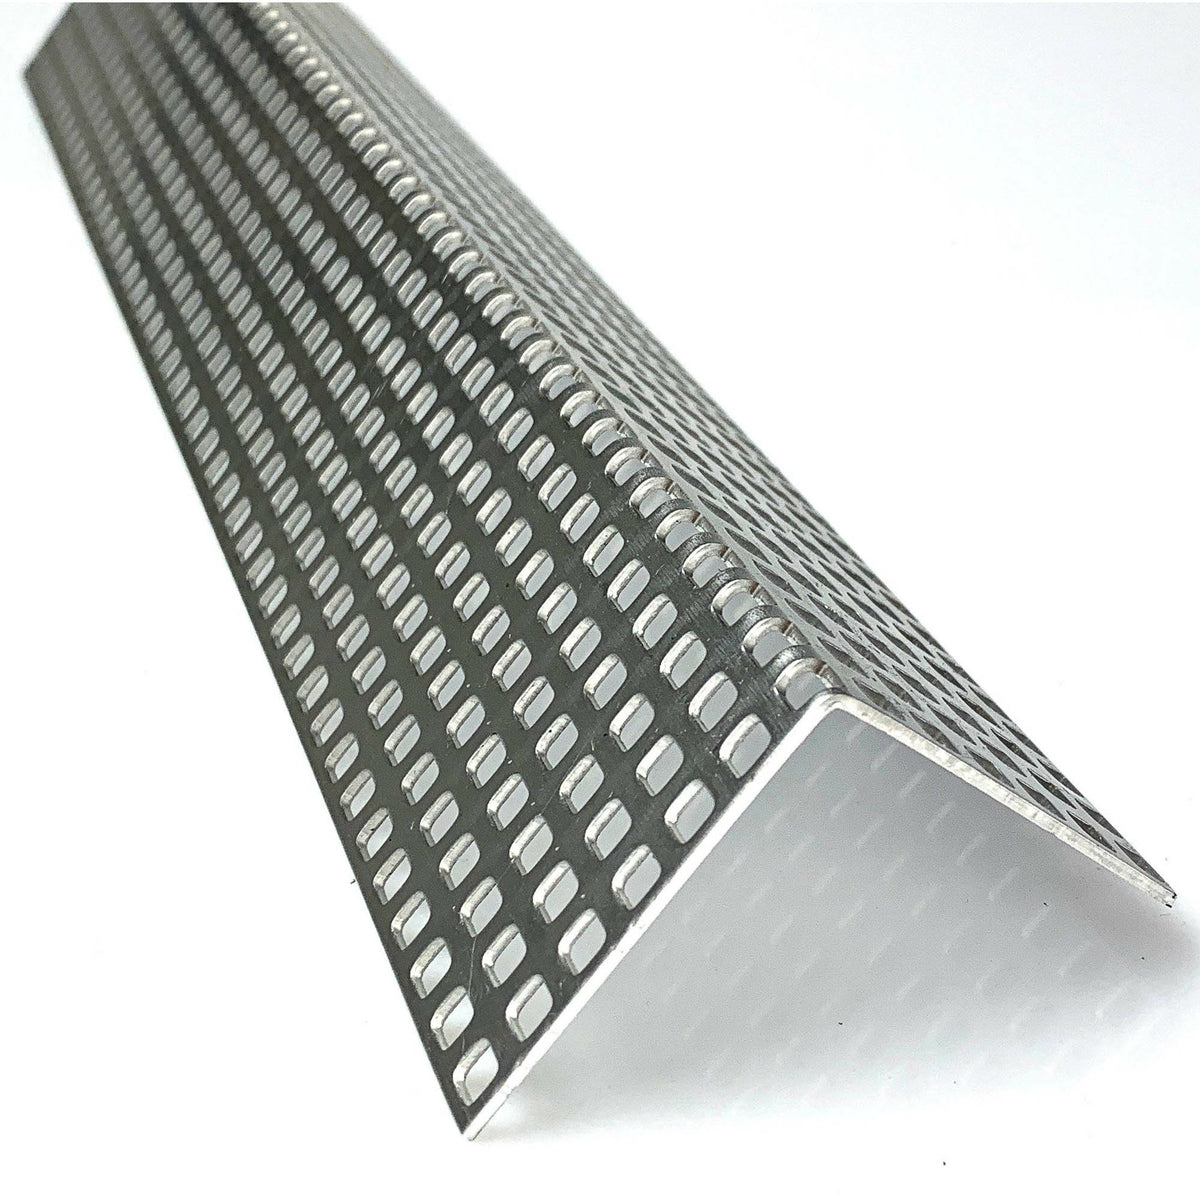 Aluminium Lochblech - L-Profil - Winkel - DIY Projekte 1,5mm dick